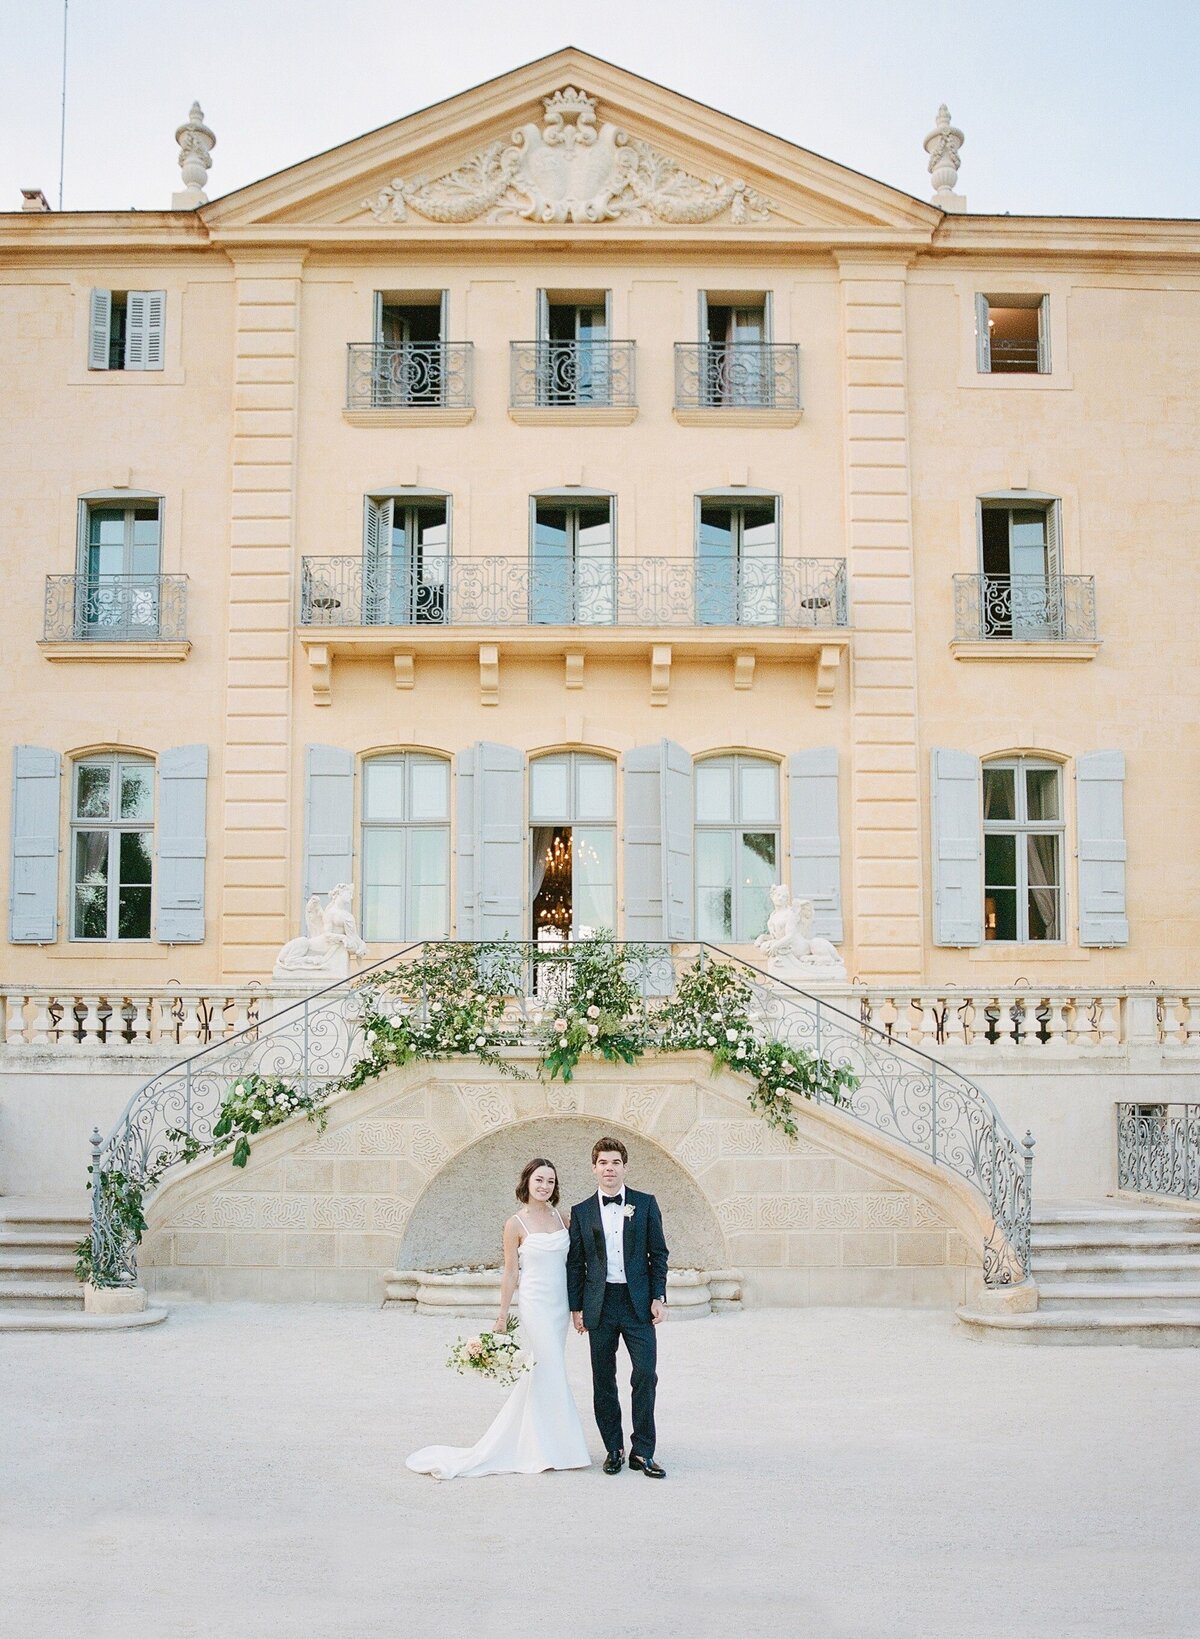 Bride_&_Groom_S&J_©_Oliver_Fly_Photography_19